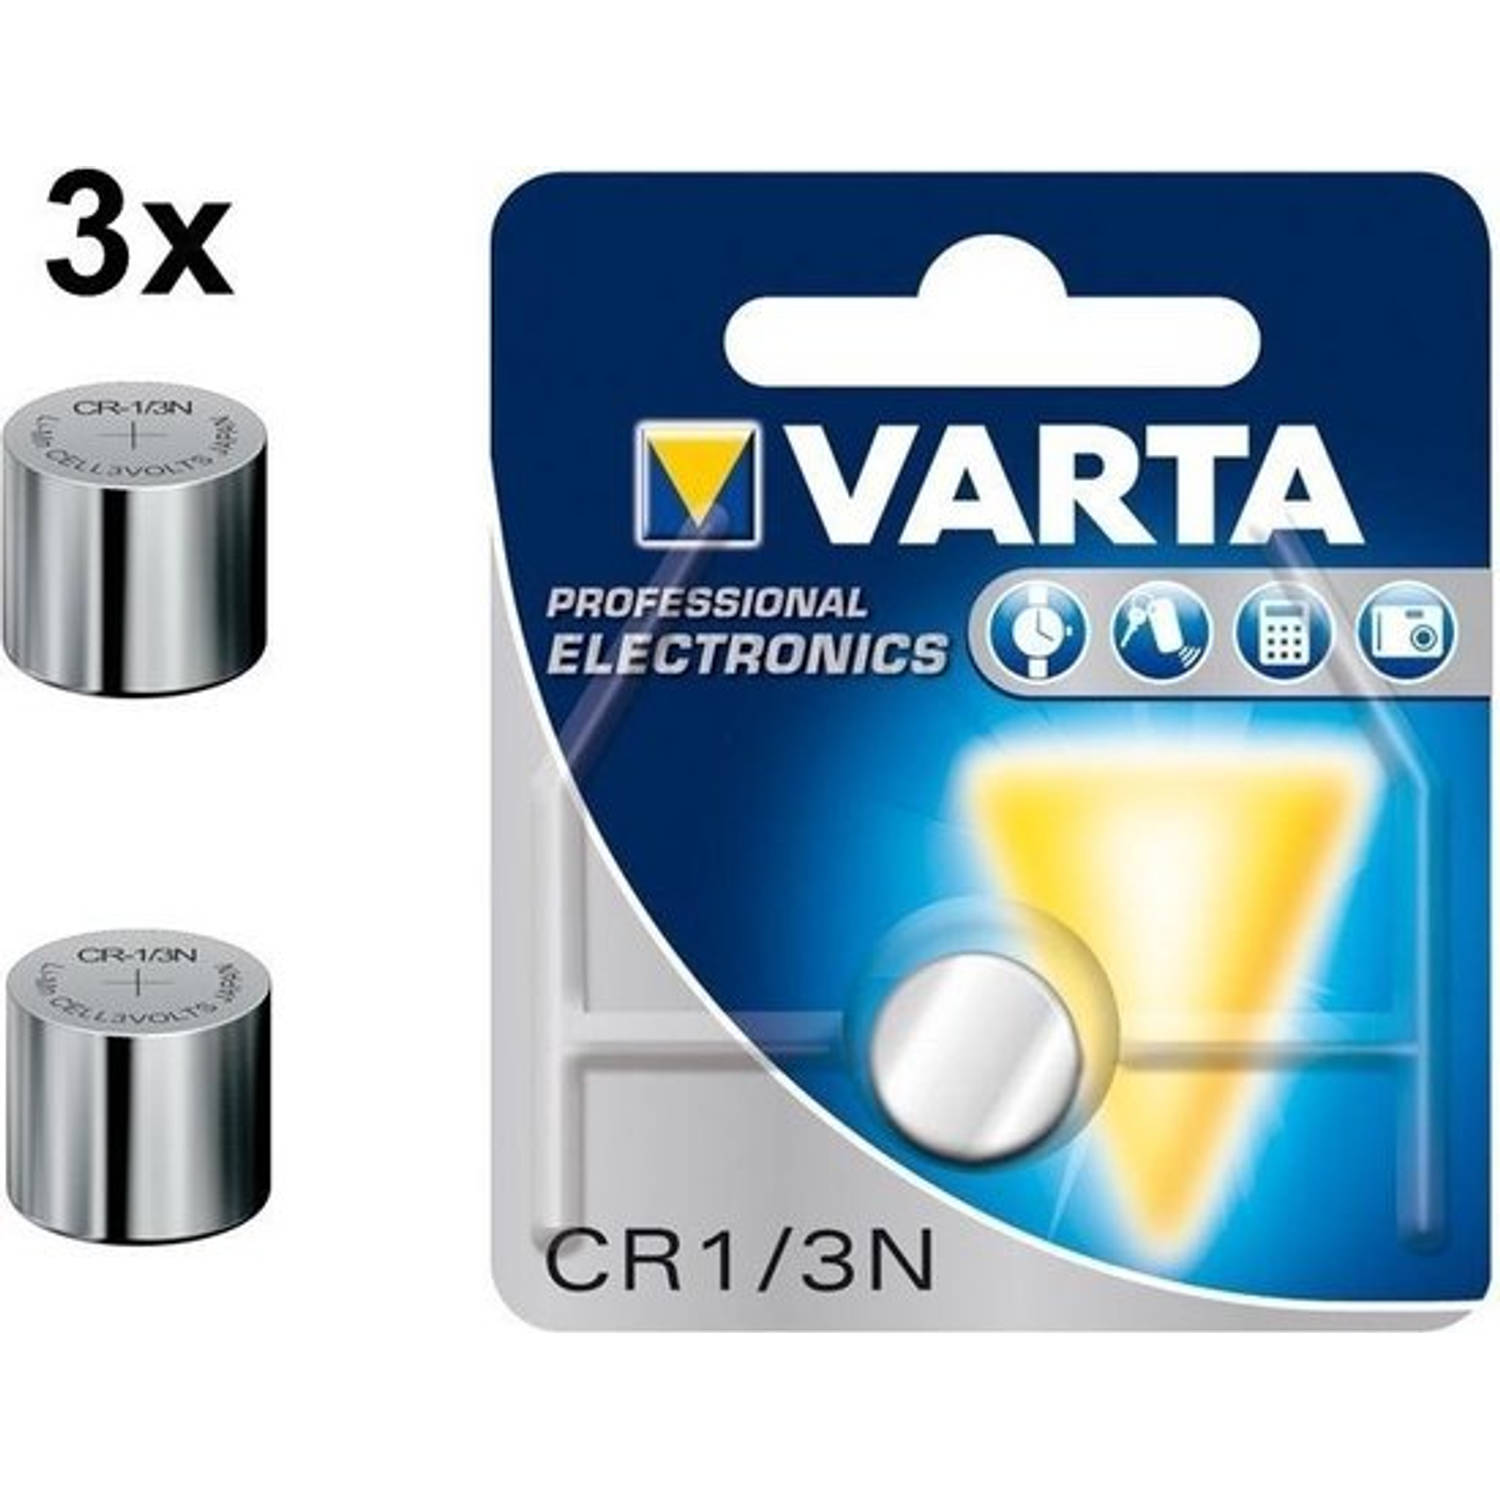 3 Stuks - Varta Professional Electronics CR 1/3 N 6131 170mAh 3V knoopcelbatterij